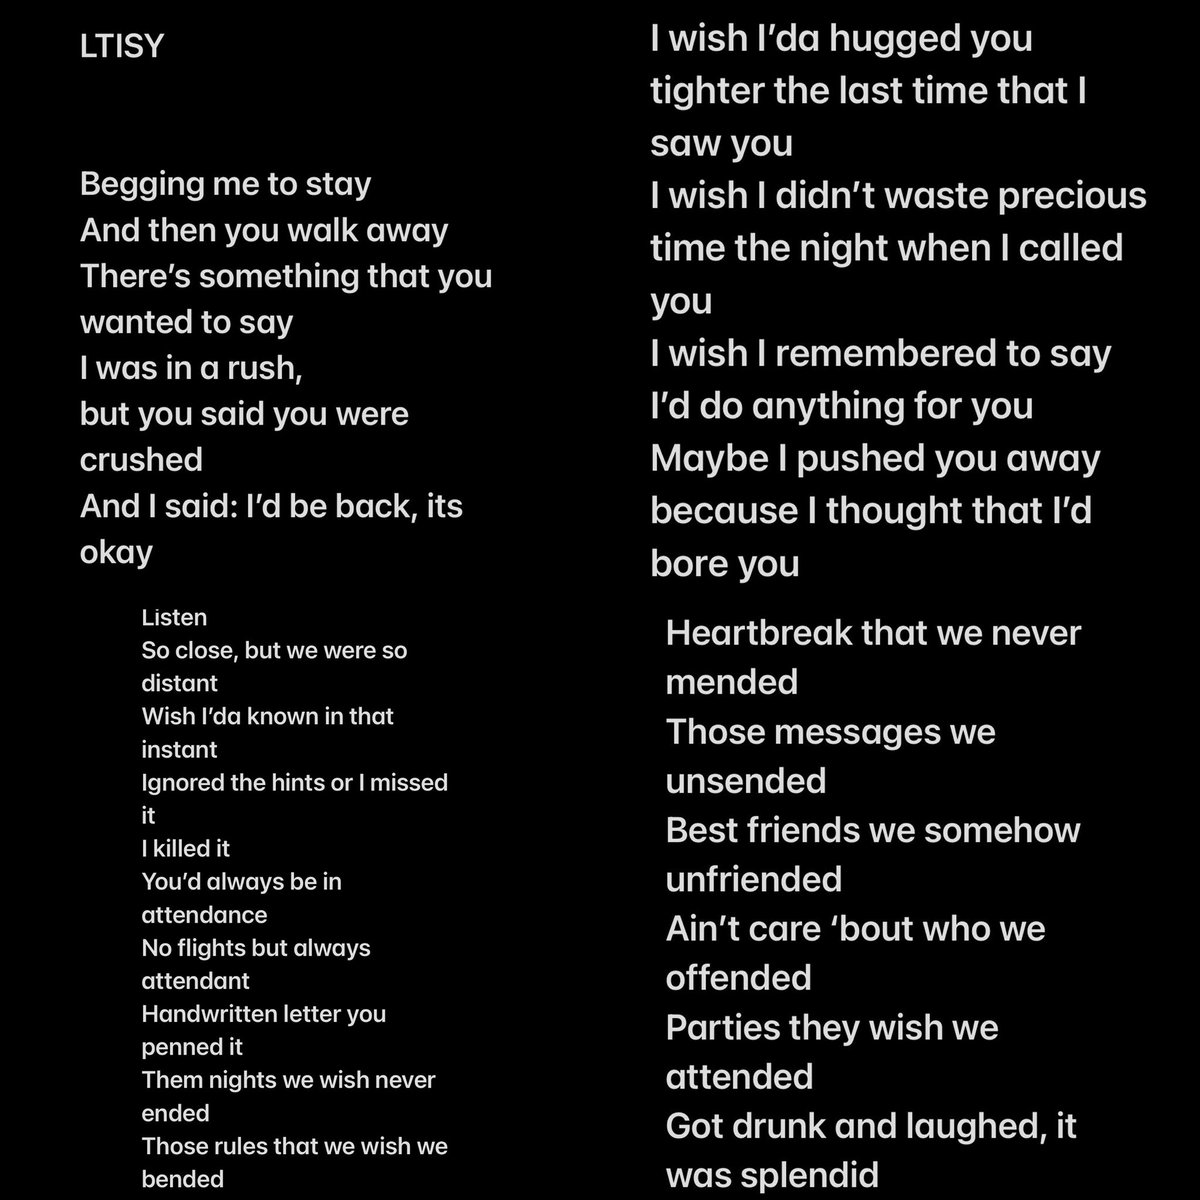 Nicki Minaj shares the lyrics to her highly-anticipated new single, 'Last Time I Saw You.'